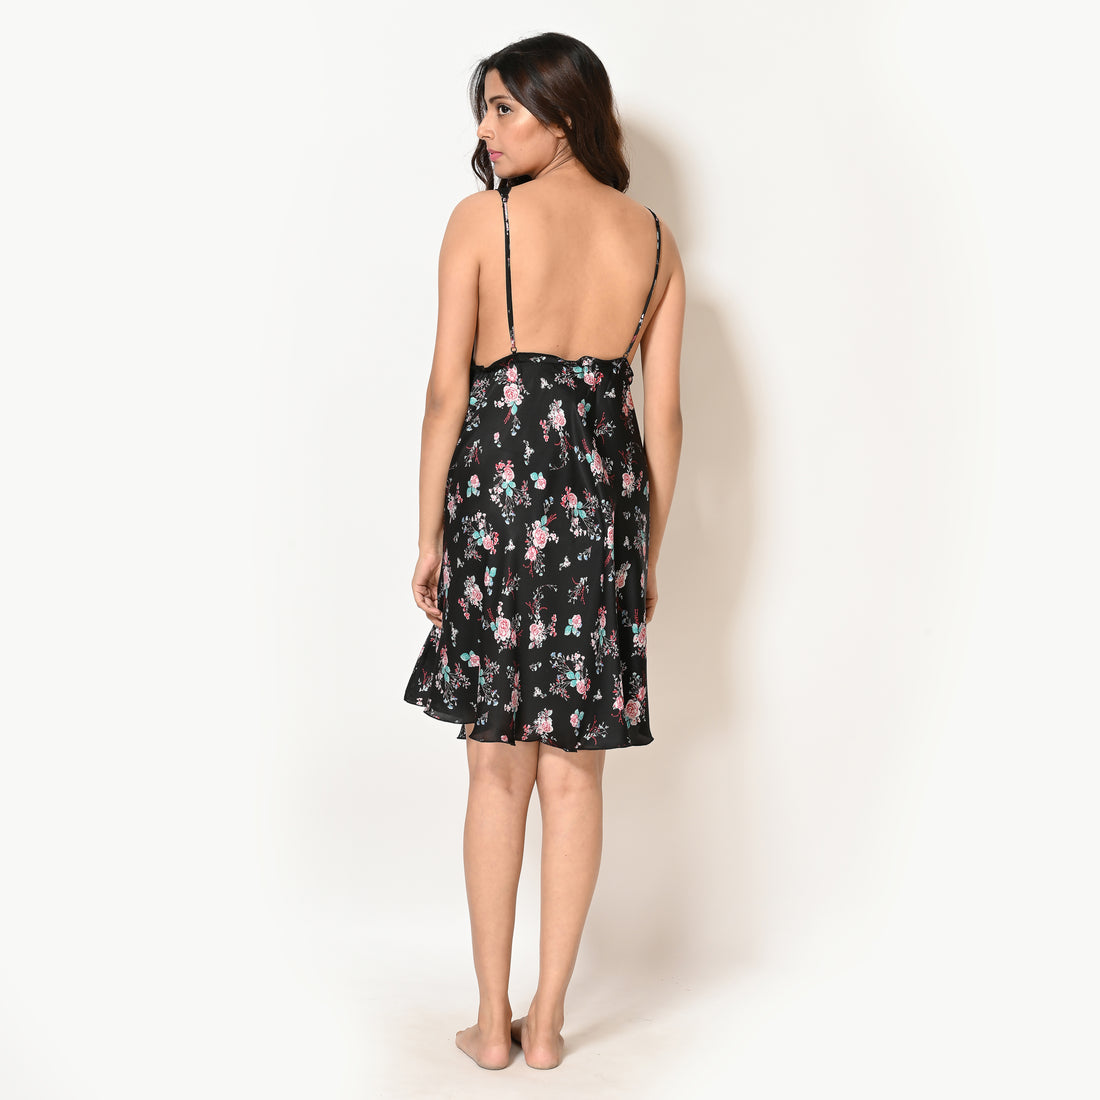 Chic Black Floral Satin Short Nightgowns for Women - Elegant Matte Finish Prints